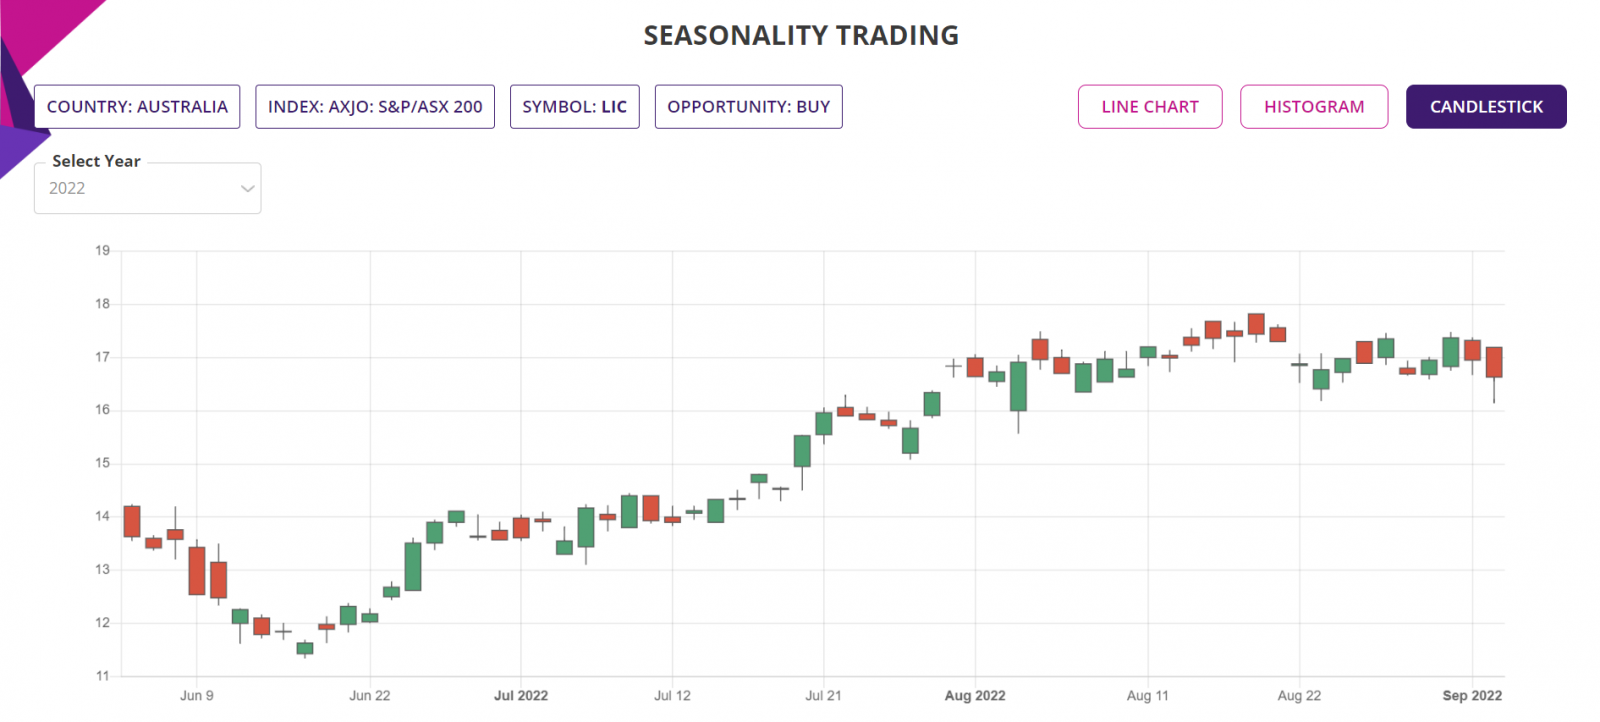 Seasonality trading strategy, detailed report, Candlestick chart, ASX200 Stocks